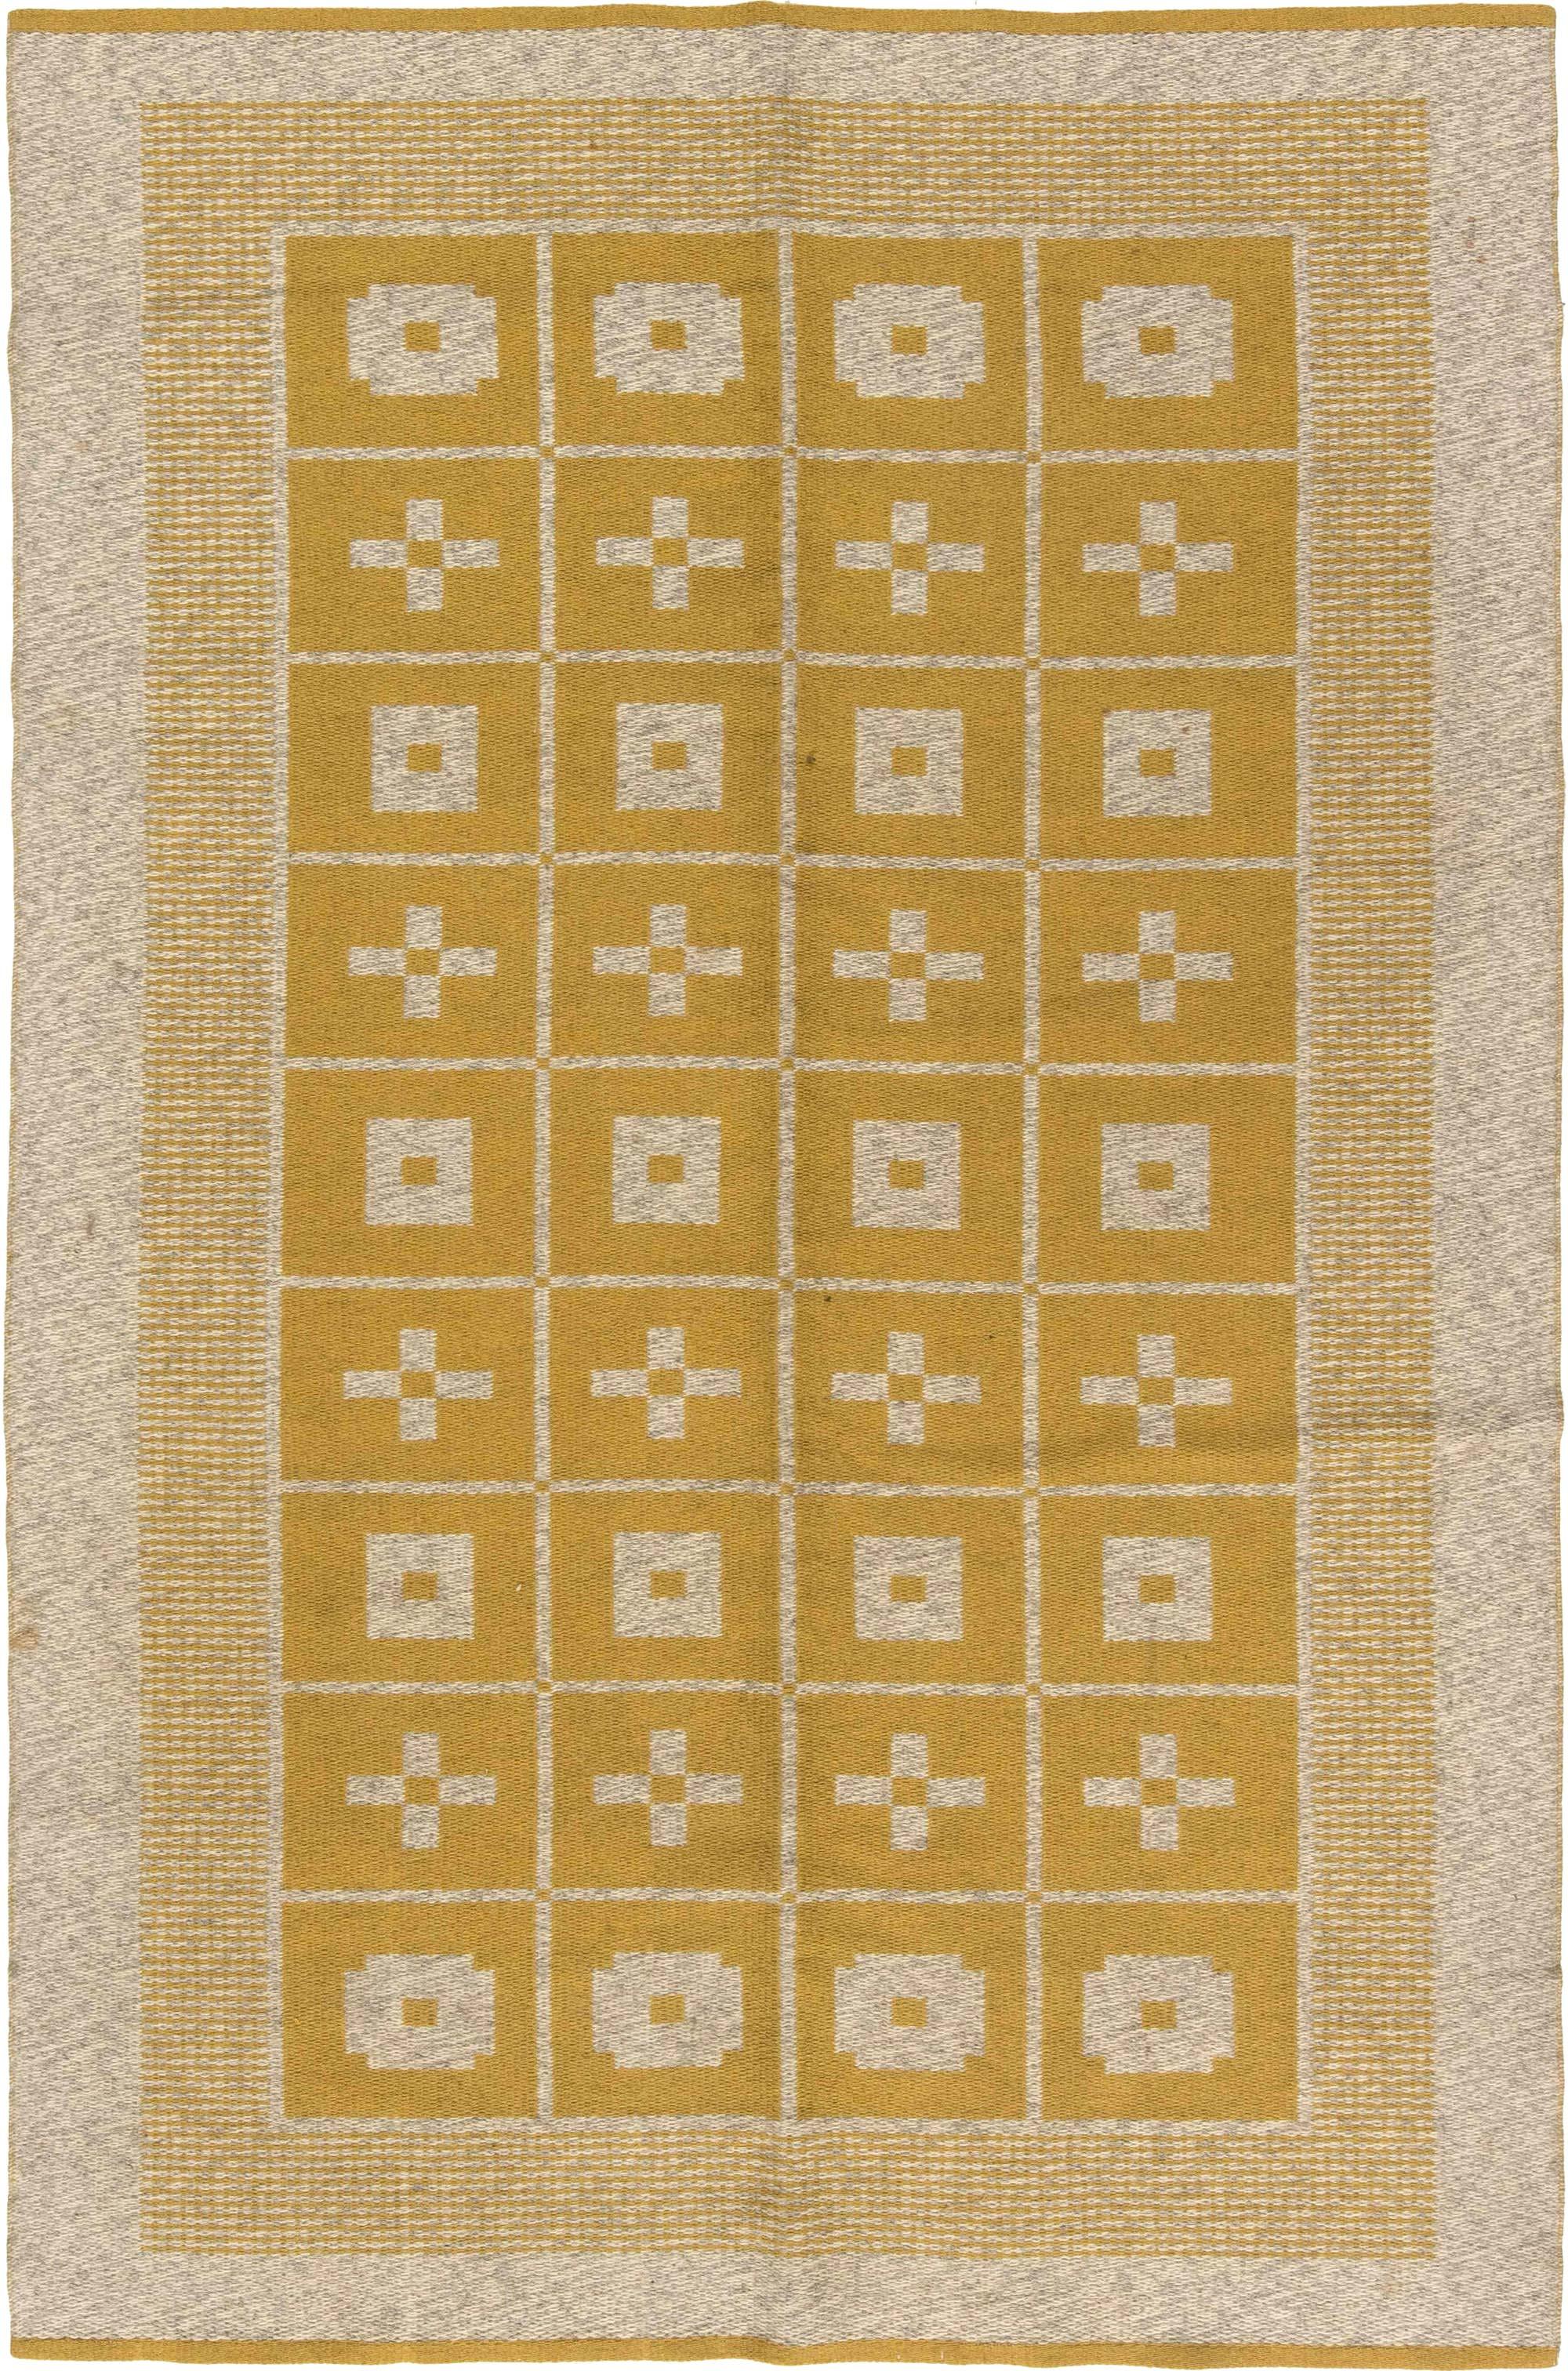 Mid-20th century Reversible Geometric Swedish rug
Size: 5'3